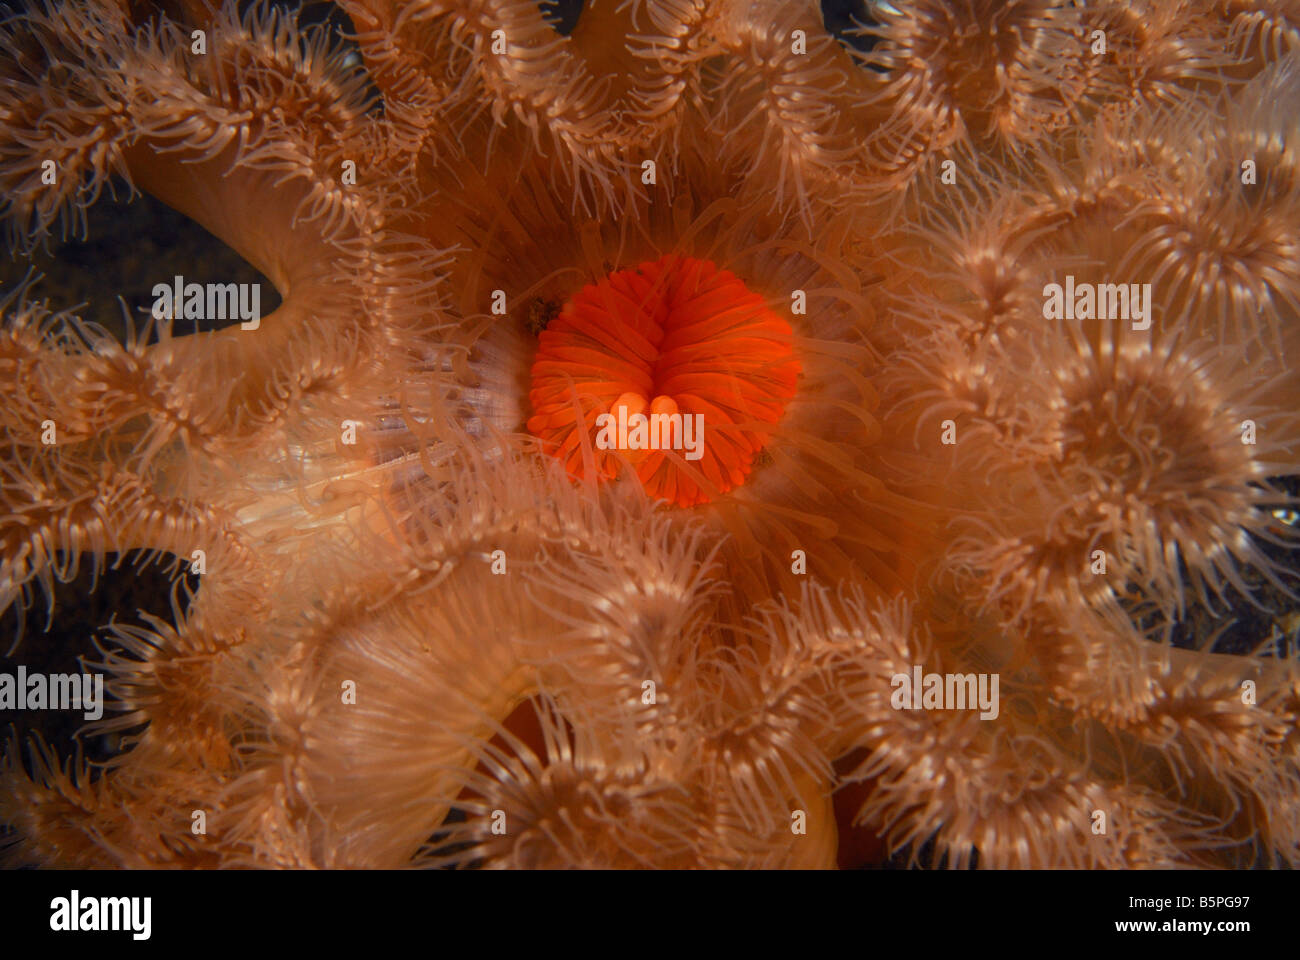 Close up detail of Plumose Anemone (Metridium senile). Stock Photo